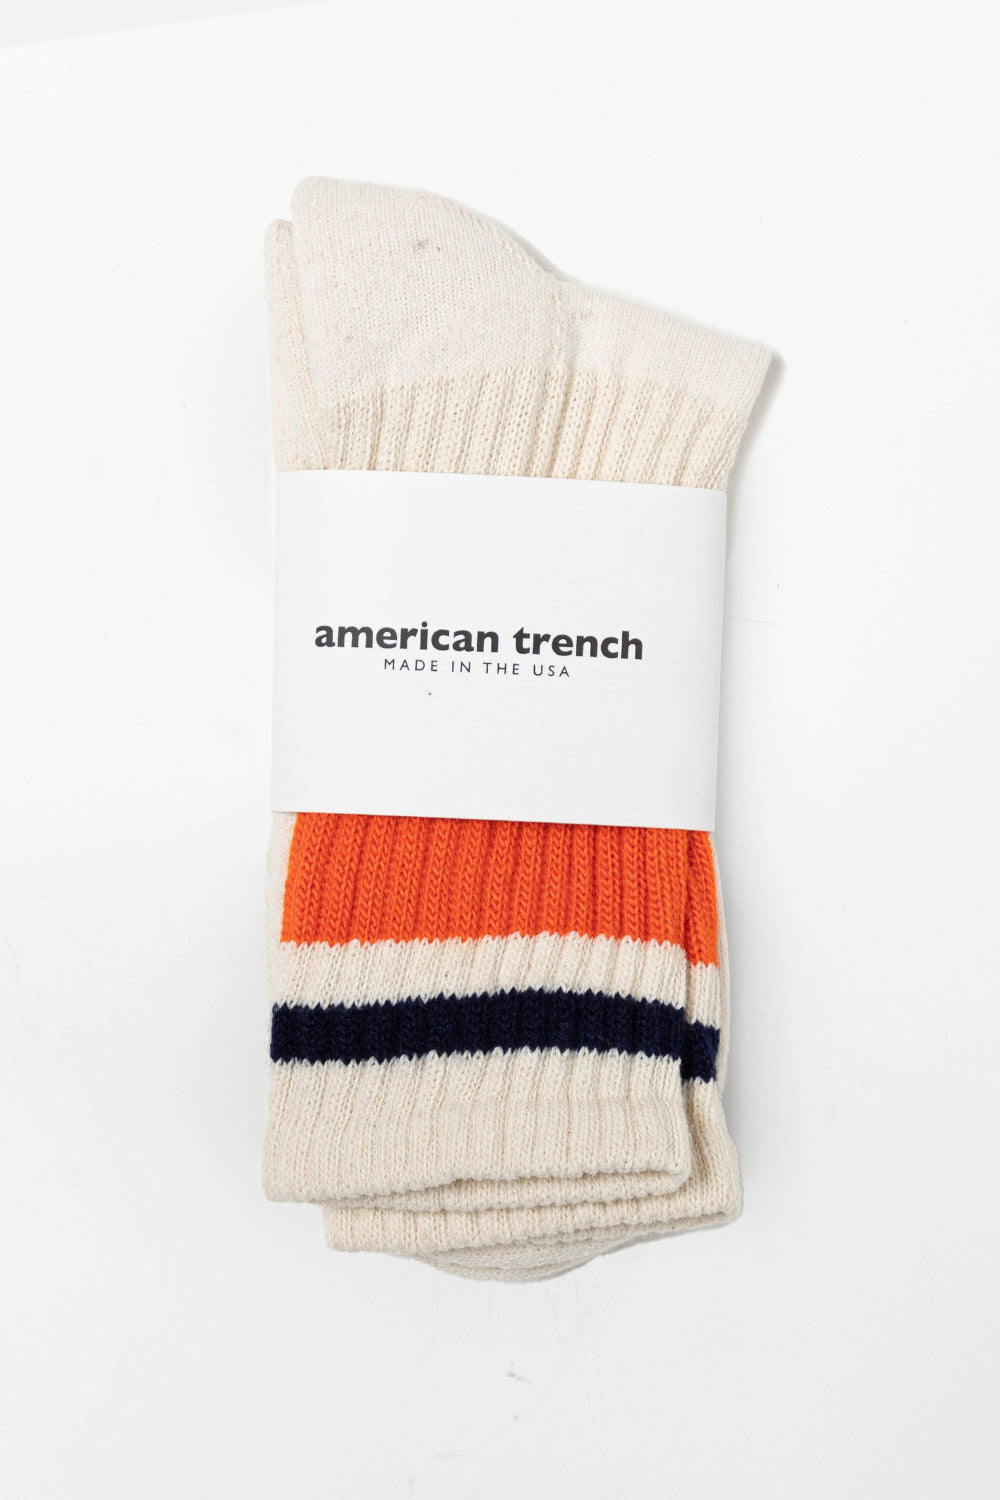 american_trench_retro_stripe_navy_orange